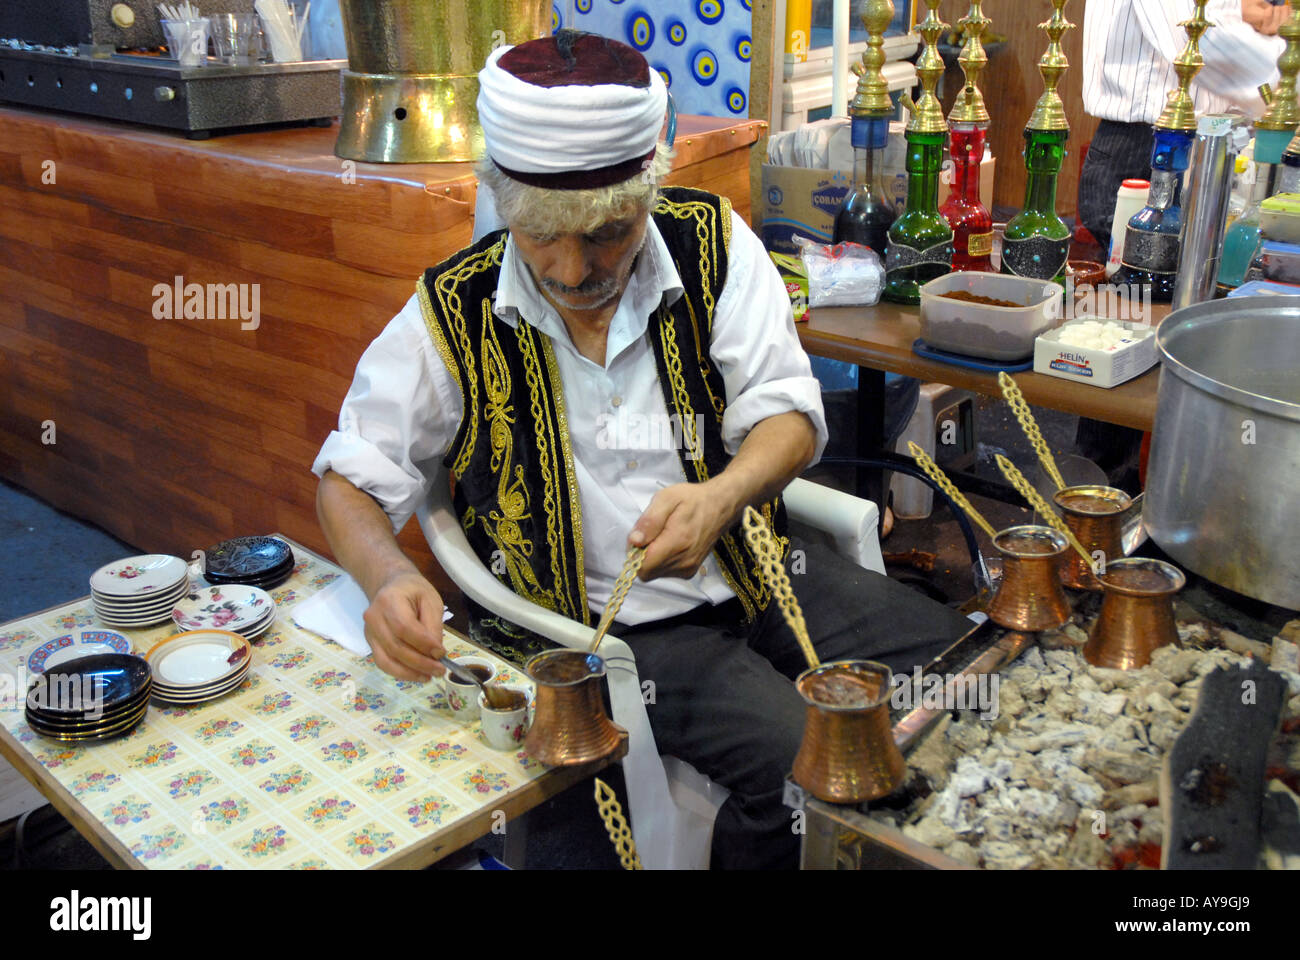 TURKISH MAN IN TRADITIONAL DRESS PREAPERING TURKISH COFFEE Stock Photo